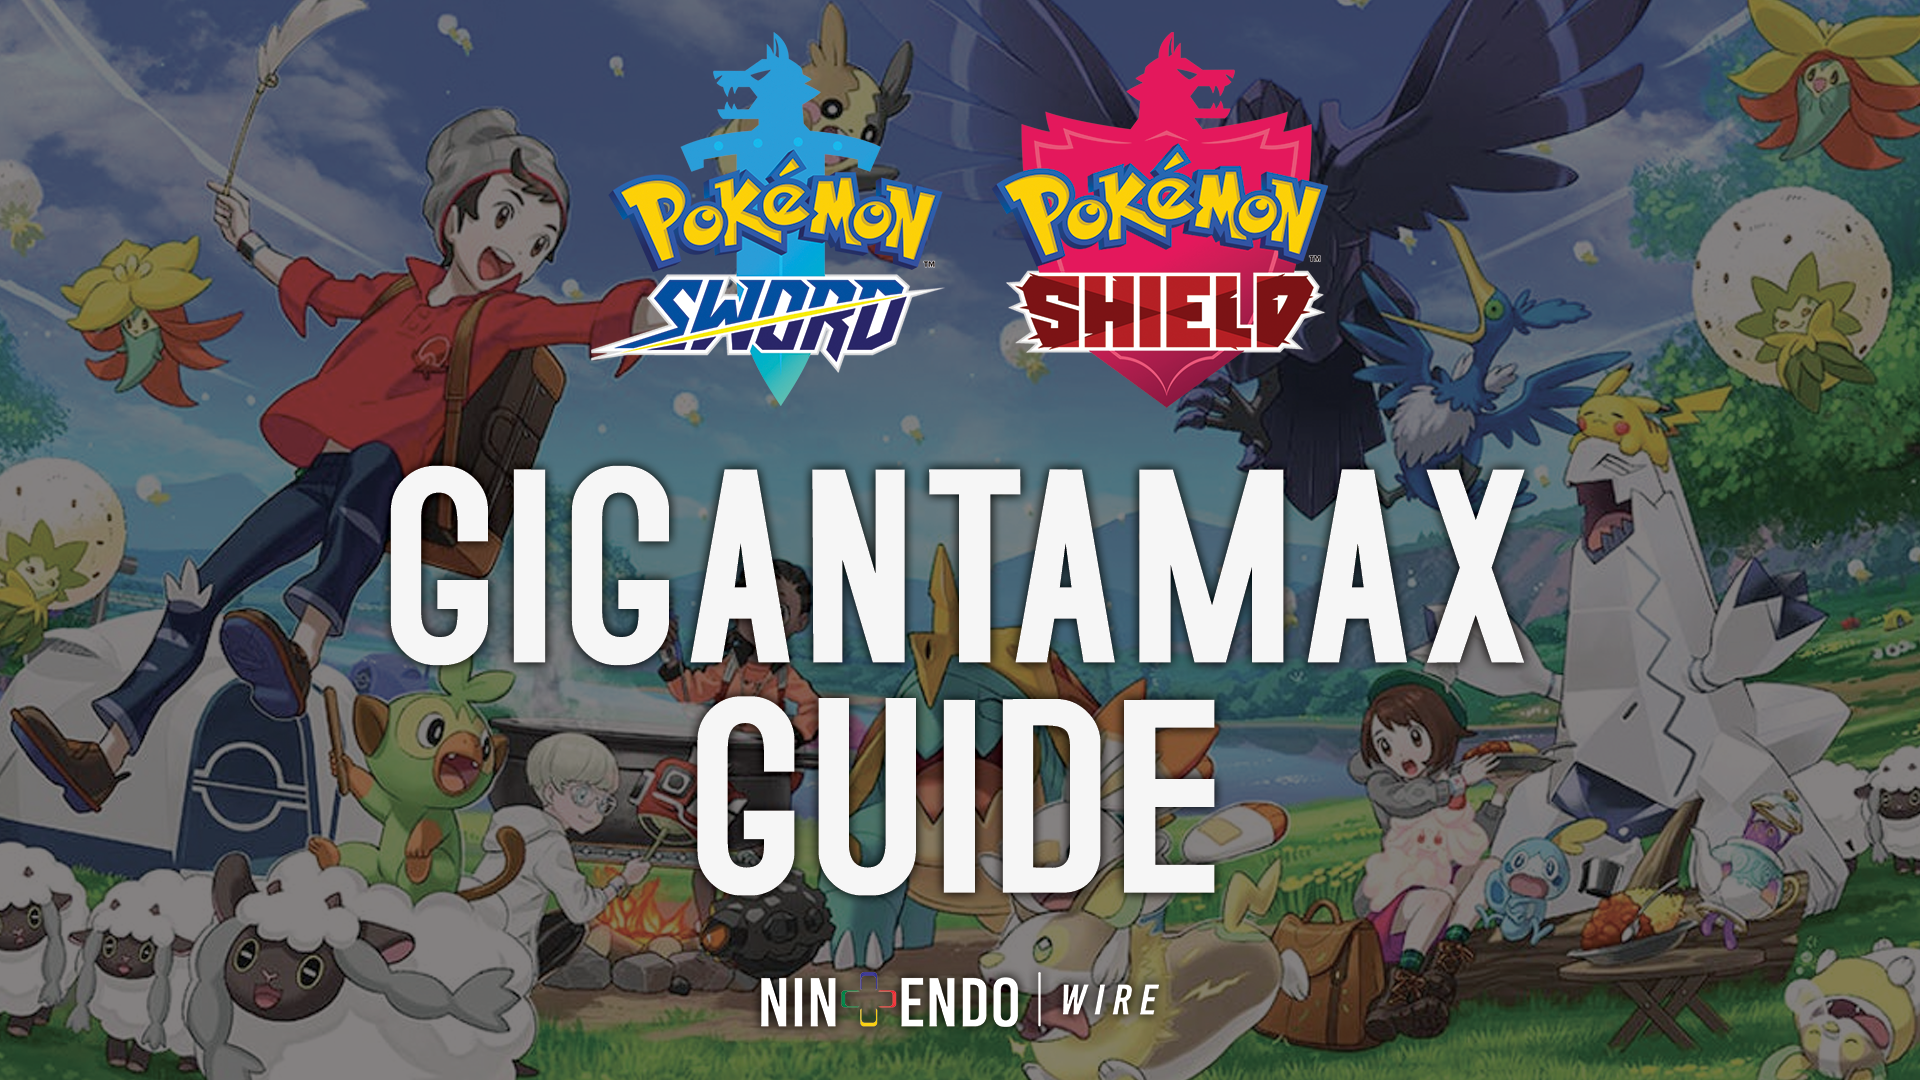 Pokemon sword and shield GBA English version, 100%  English, Gigantamax, Dynamax